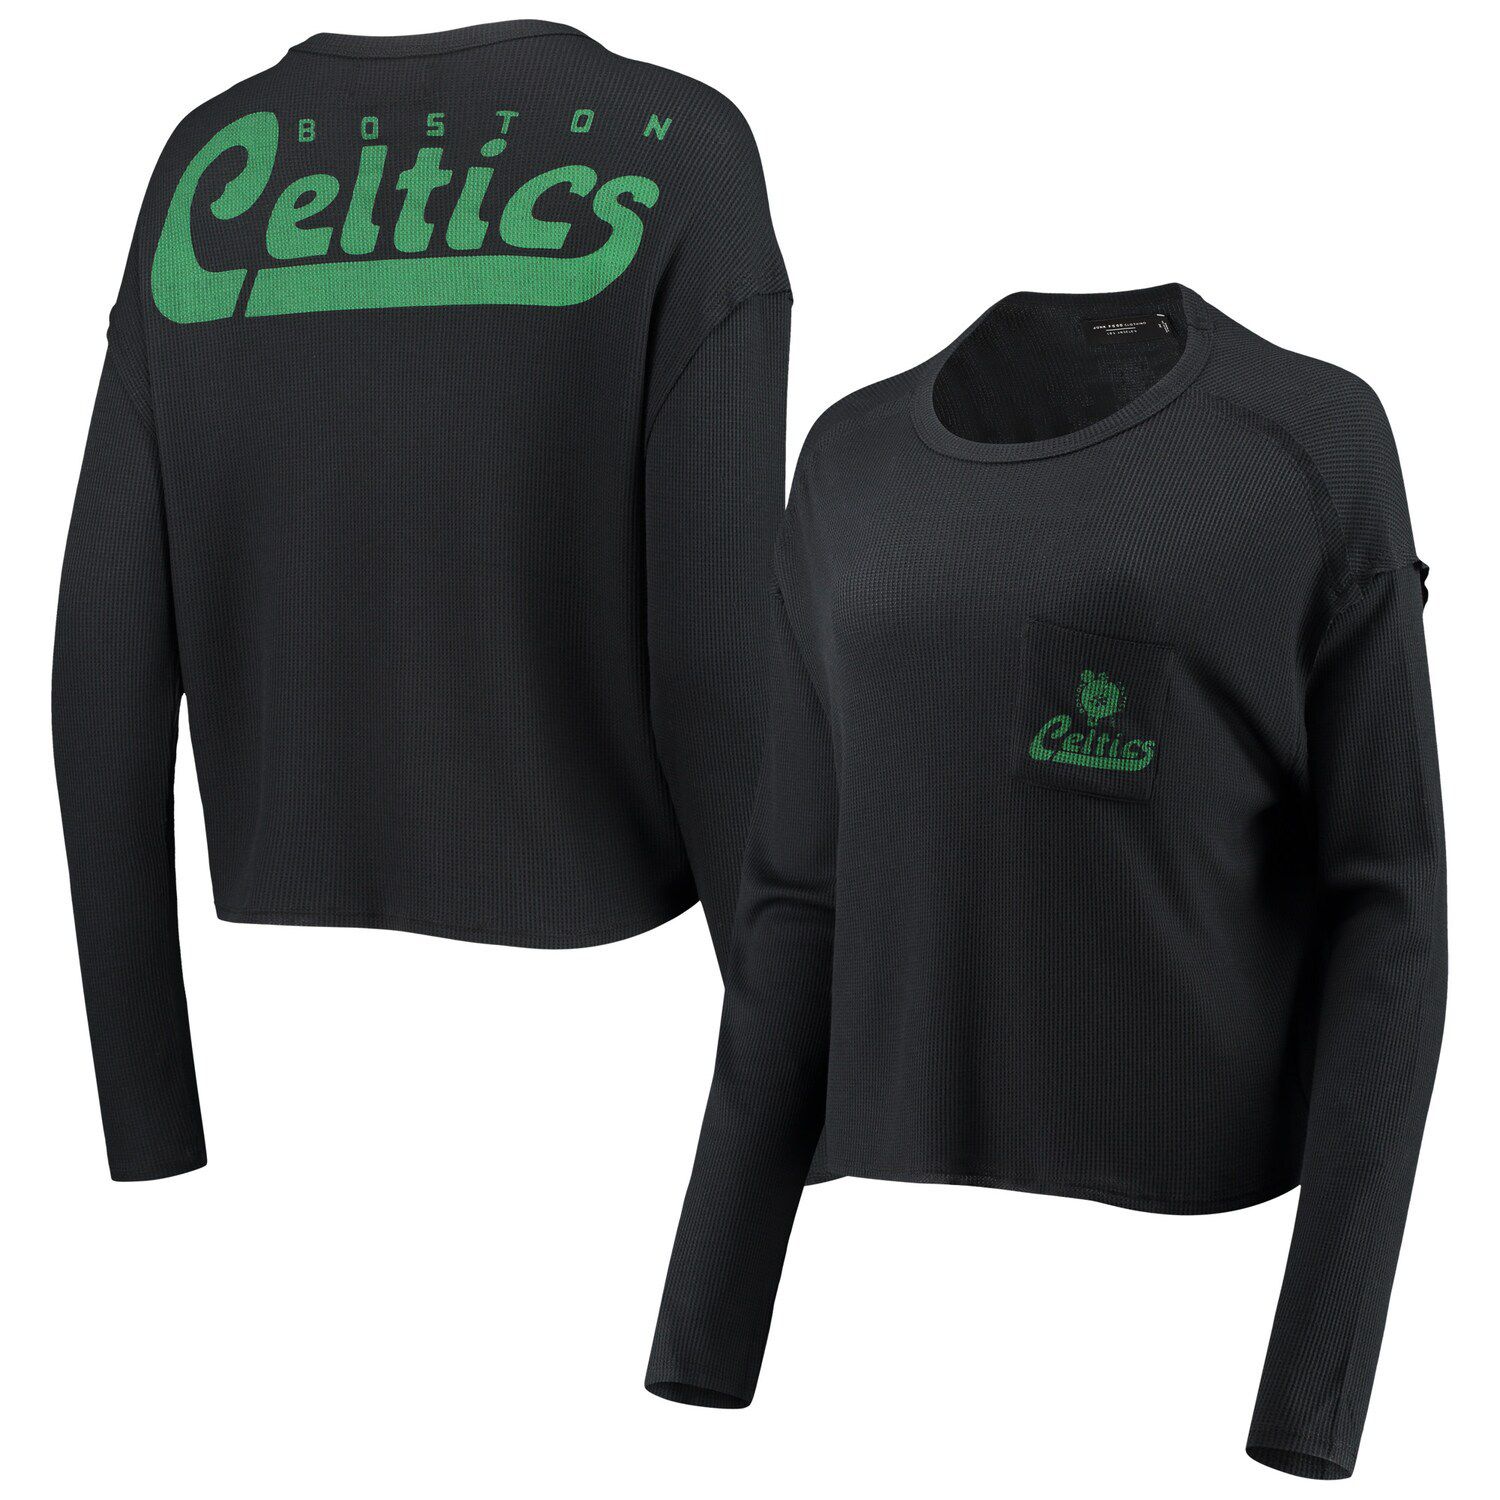 Image for Unbranded Women's Junk Food Black Boston Celtics Pocket Thermal Tri-Blend Long Sleeve T-Shirt at Kohl's.